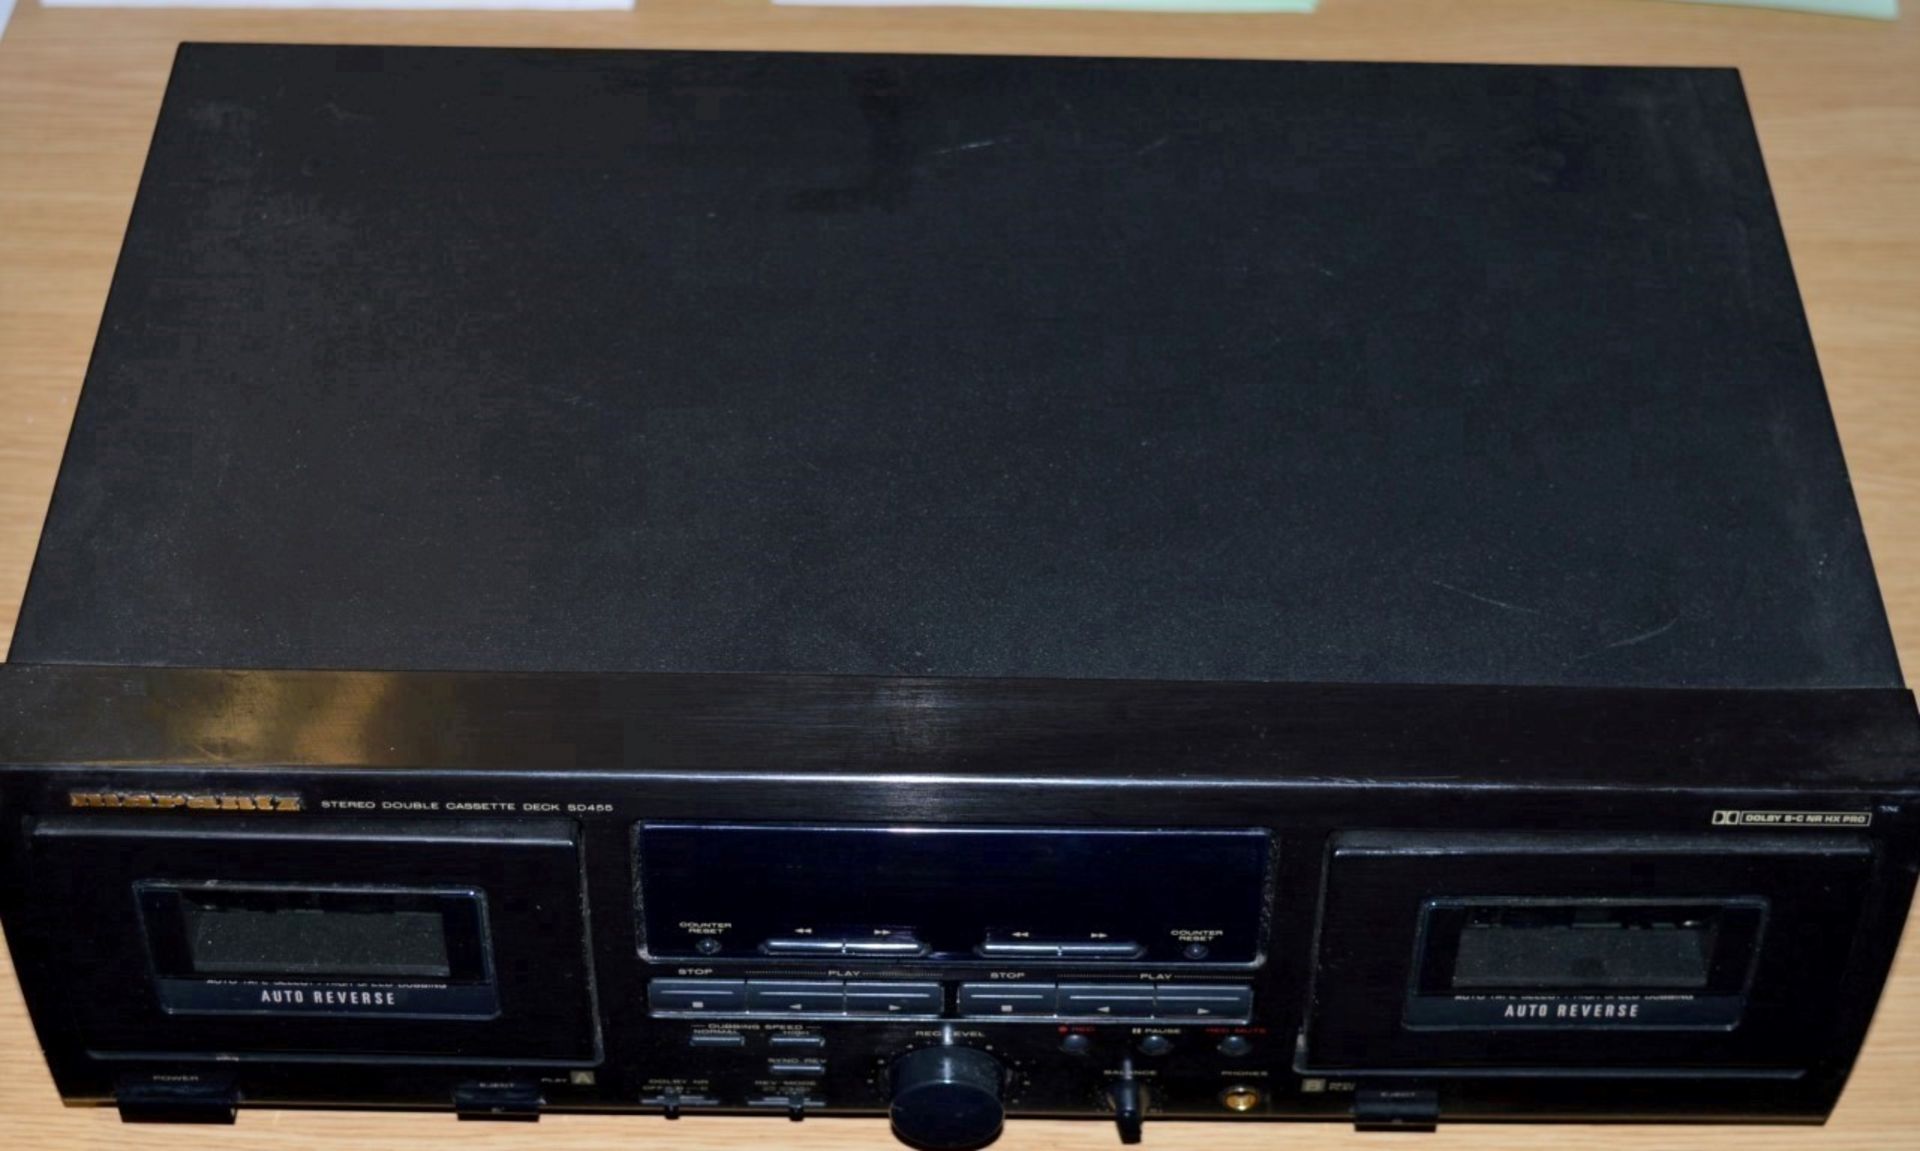 1 x Marantz Stereo Double Cassette Deck - Model SD455 - Working Order - CL010 - Location: Altrincham